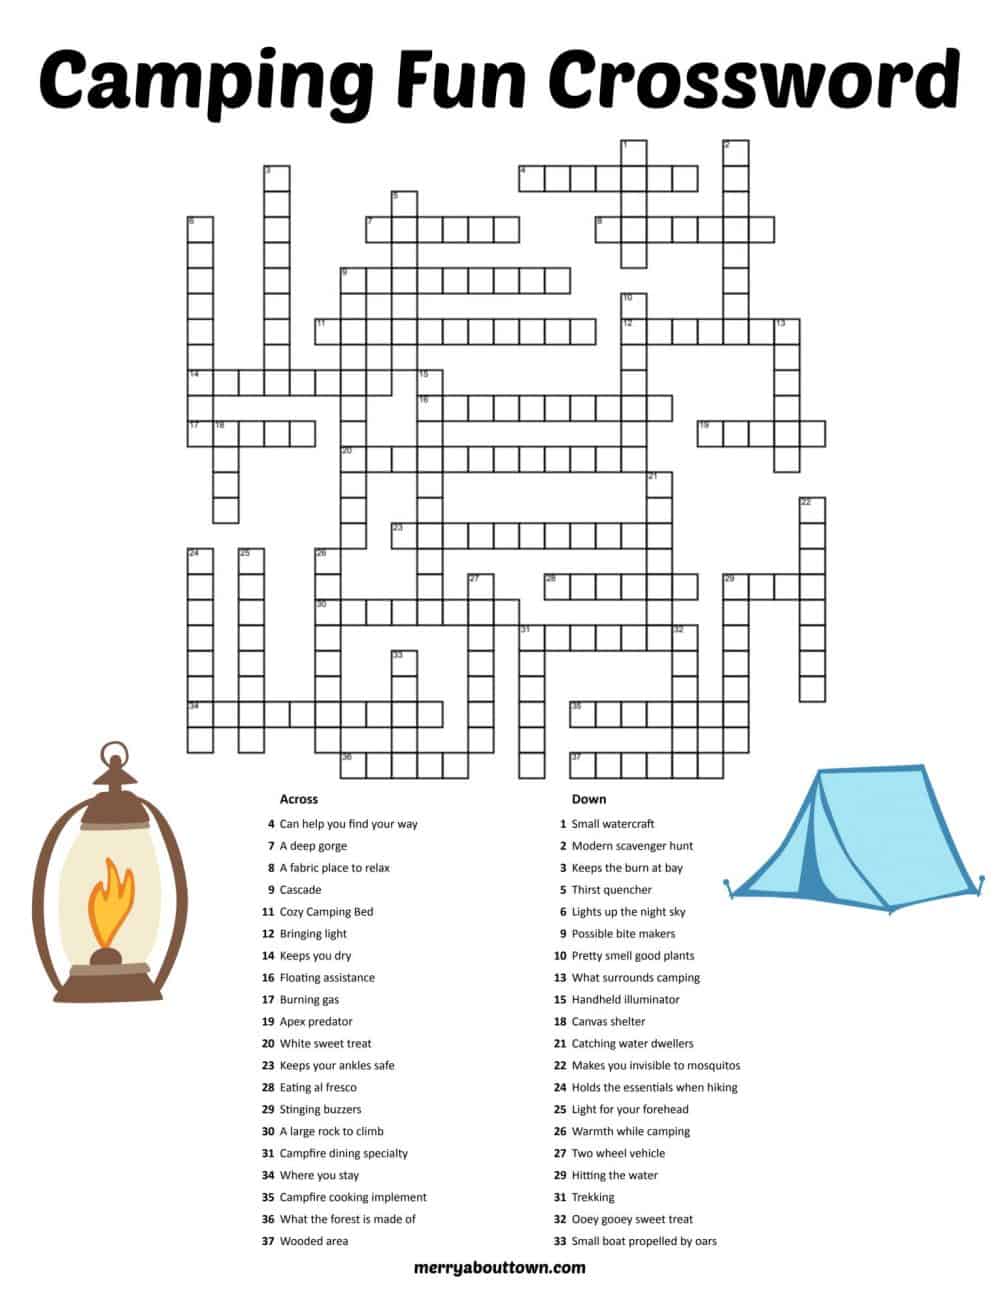 Camping Activities for Kids - Printable camping fun crossword